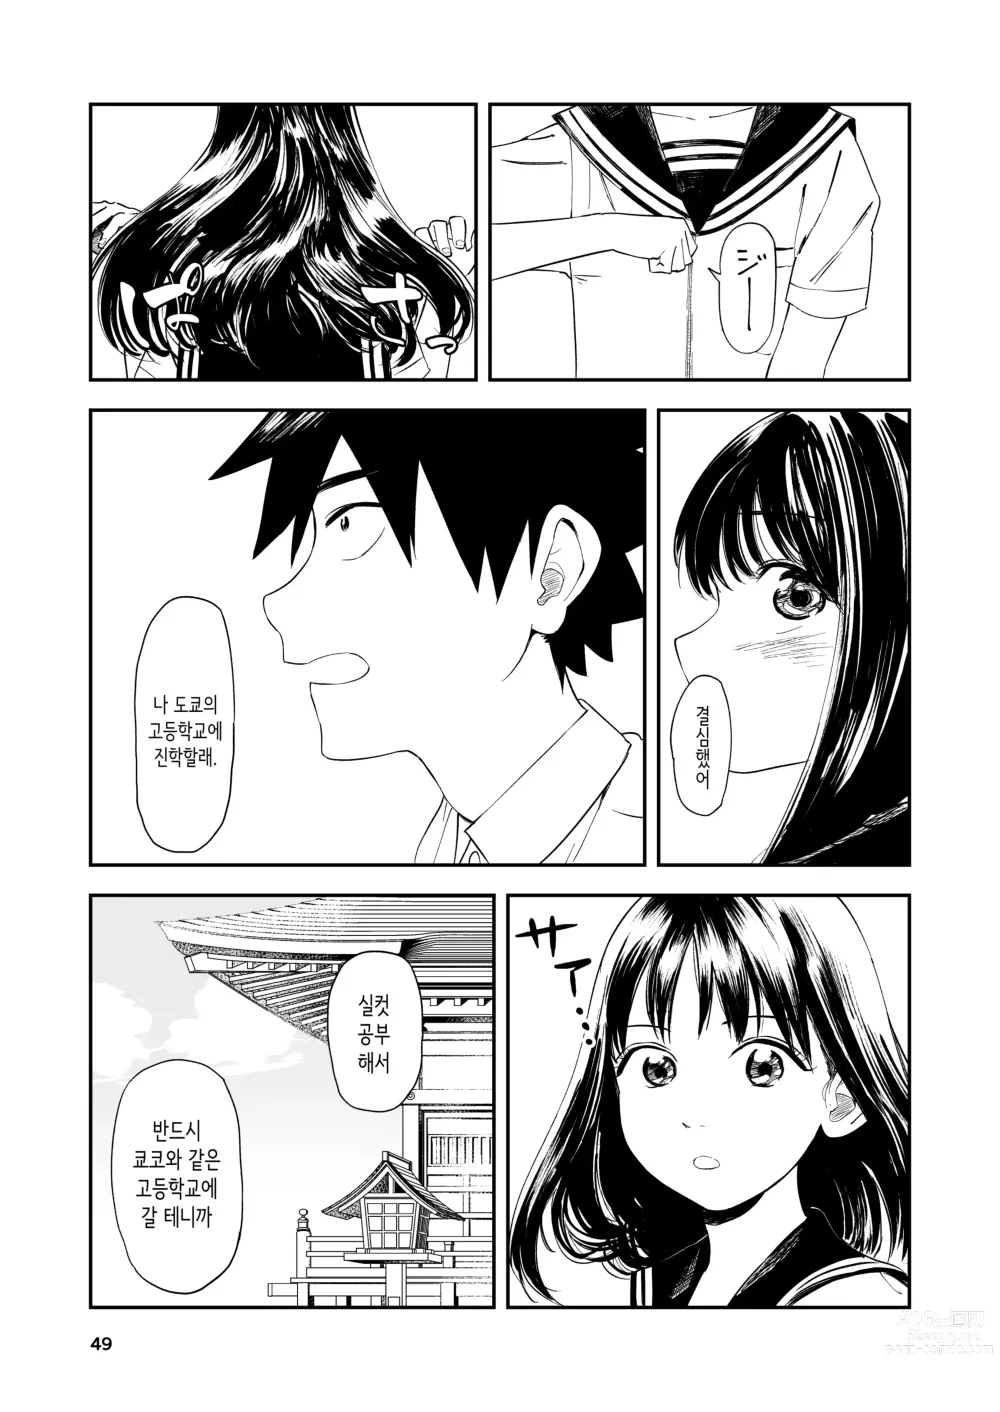 Page 49 of doujinshi 평생 잊을 수 없는 섹스